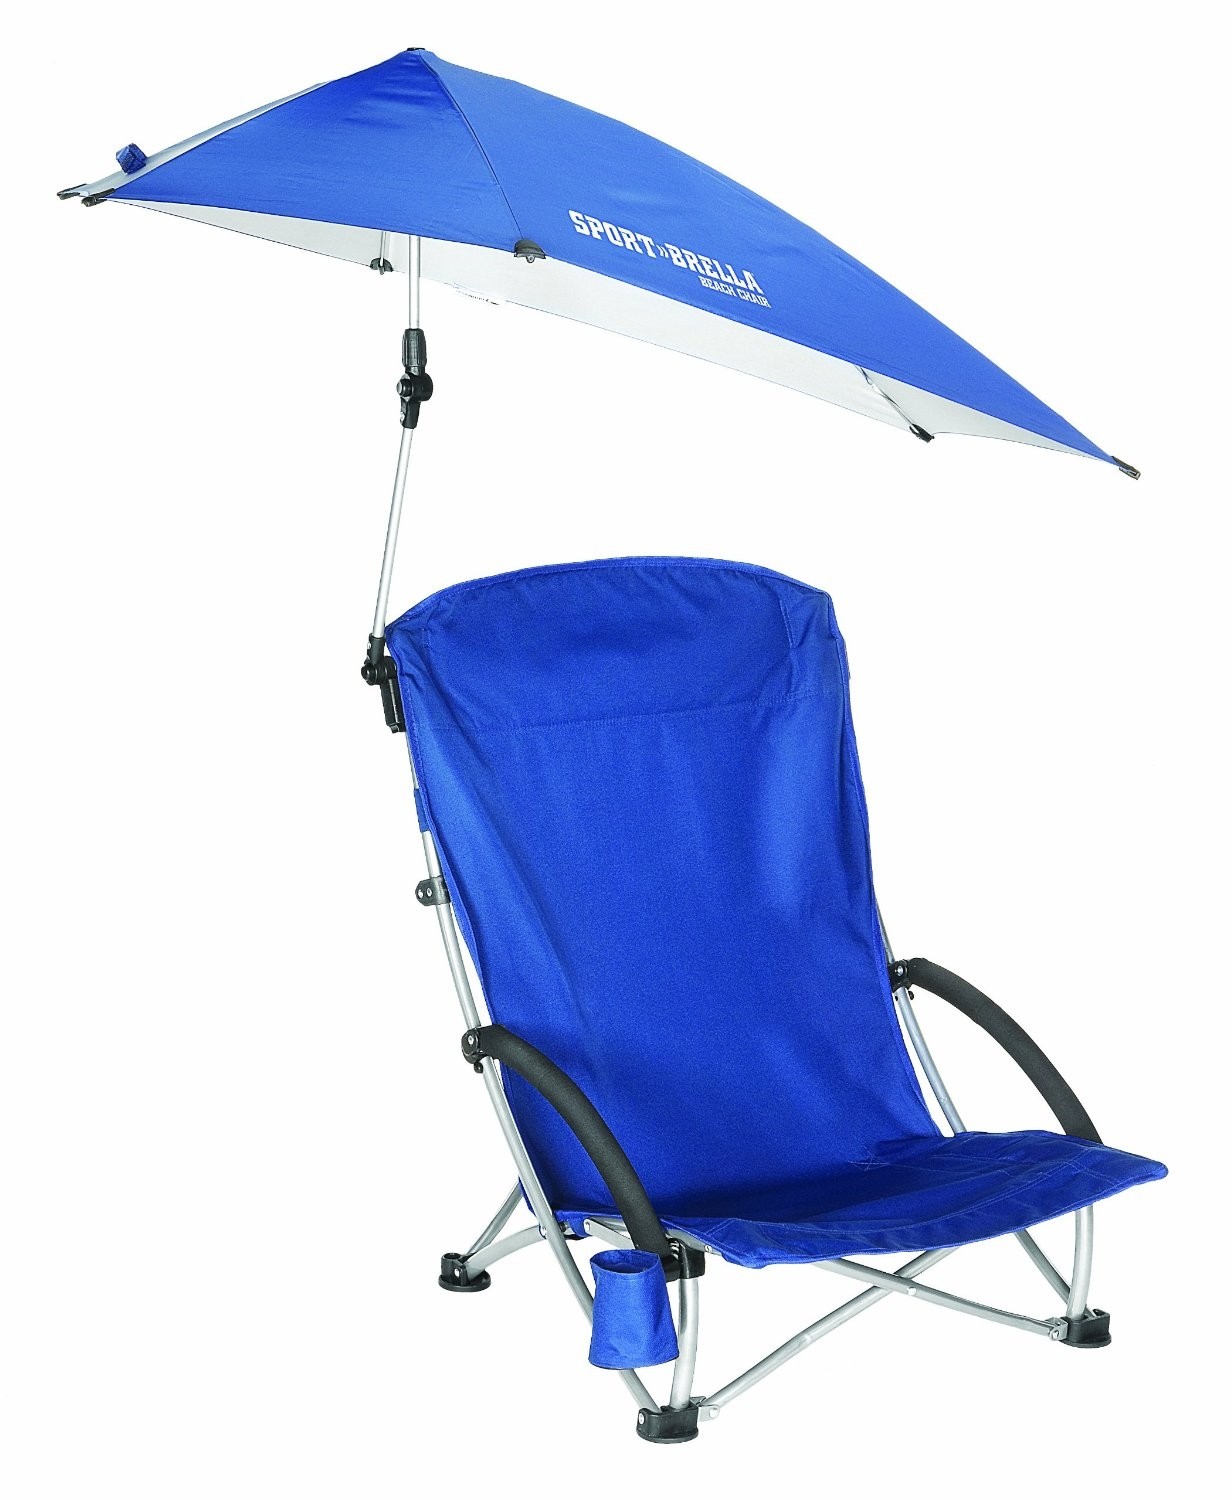 Portable beach chairs lightweight 1